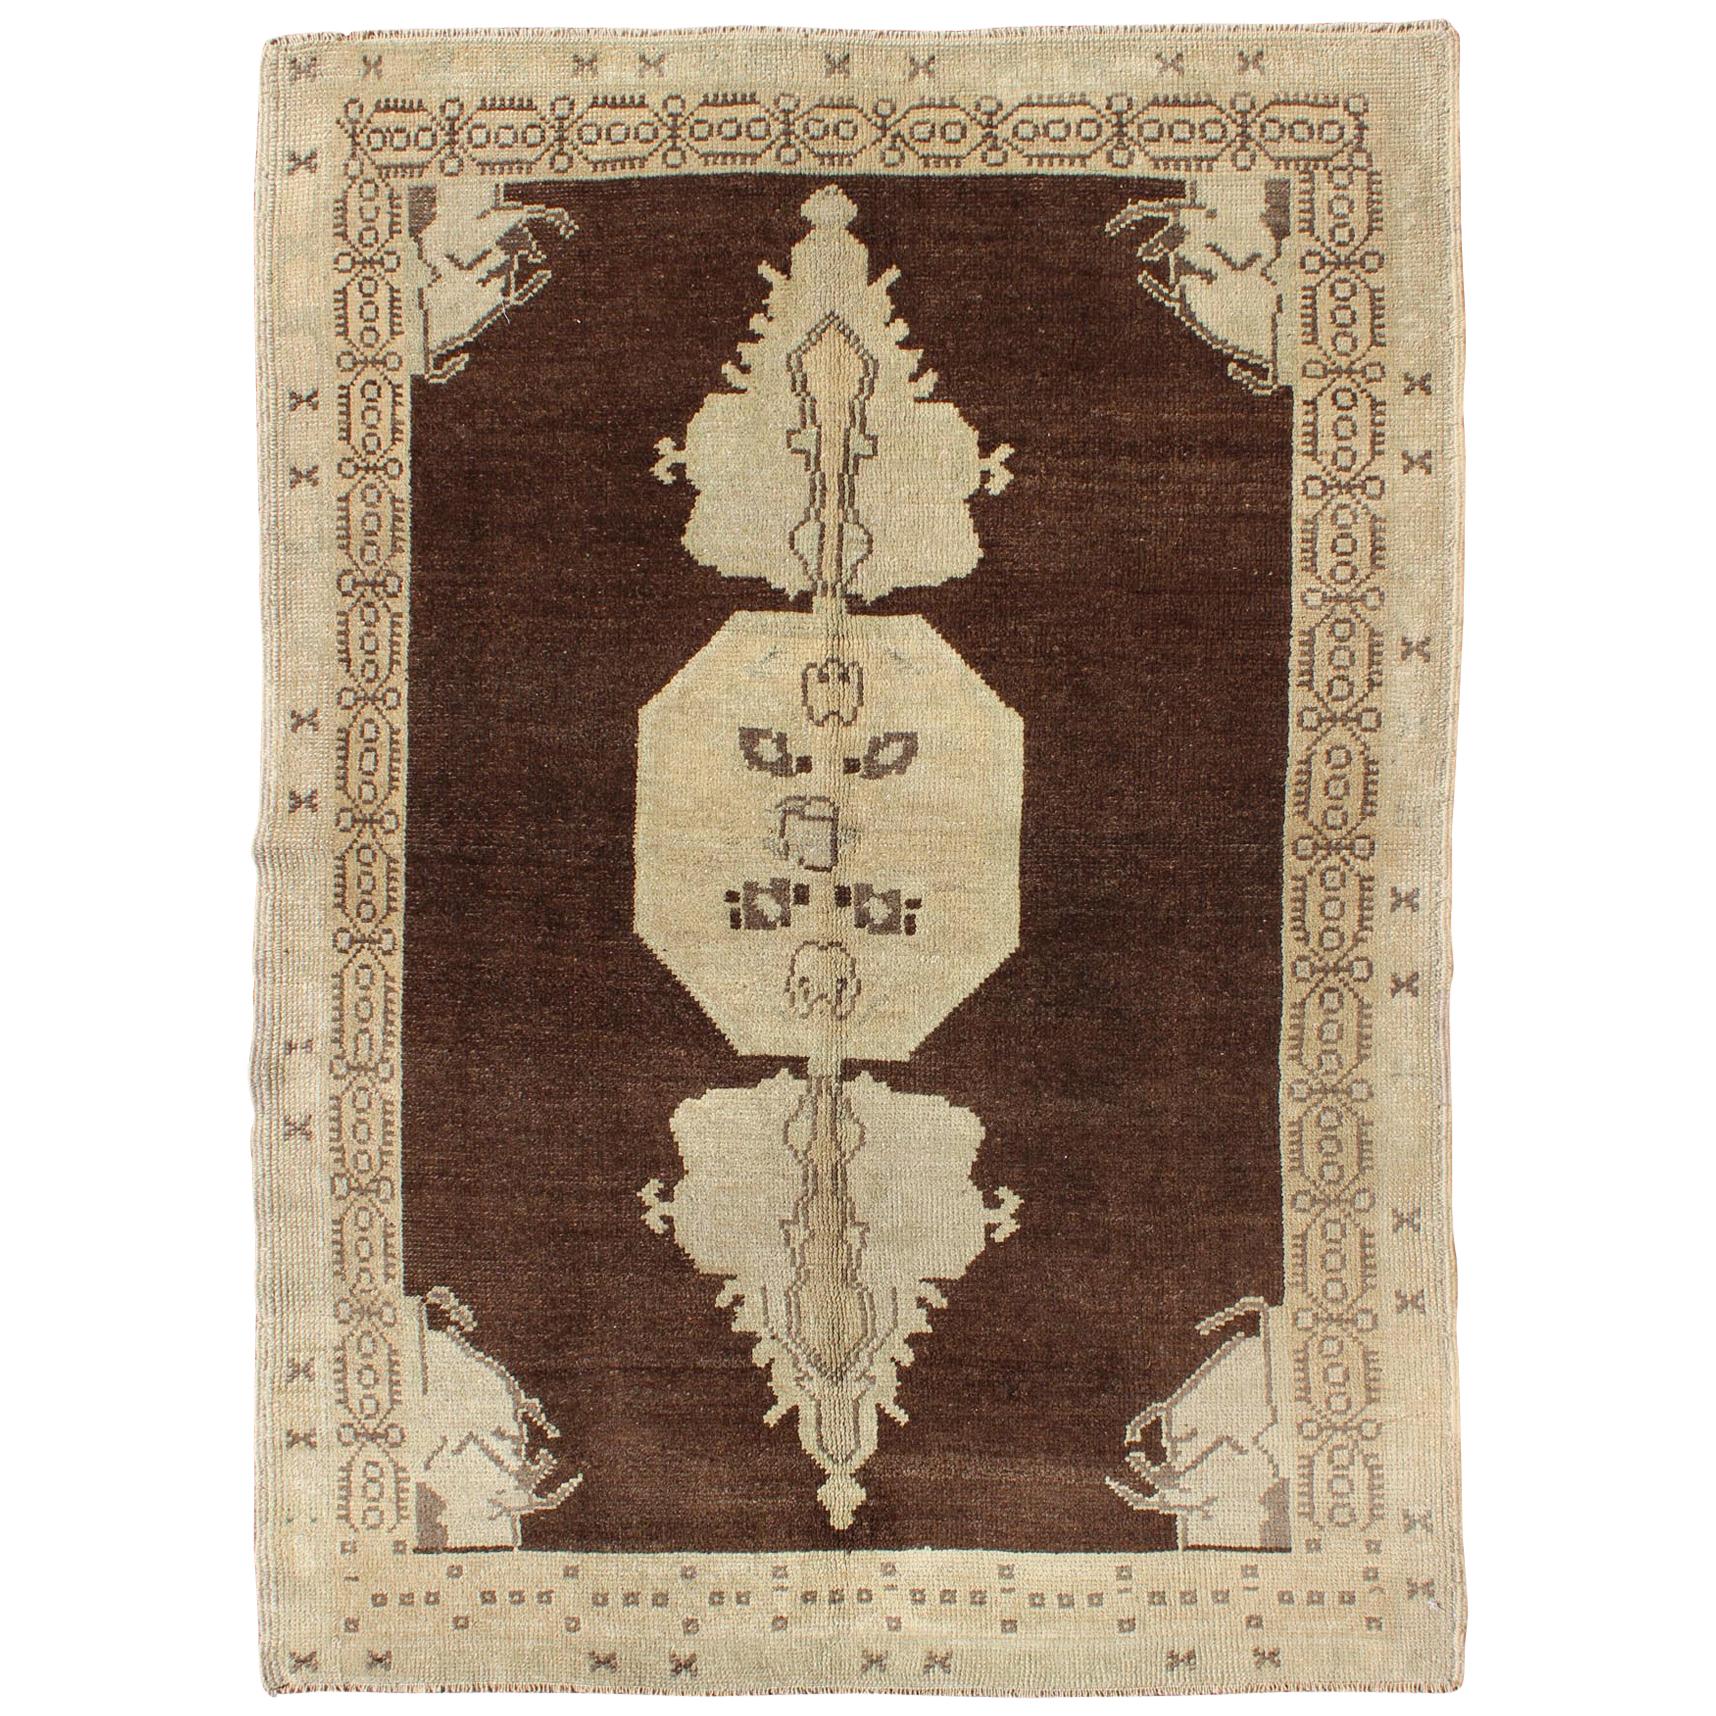  Brown and  Natural tone medallion design Oushak vintage rug from Turkey For Sale